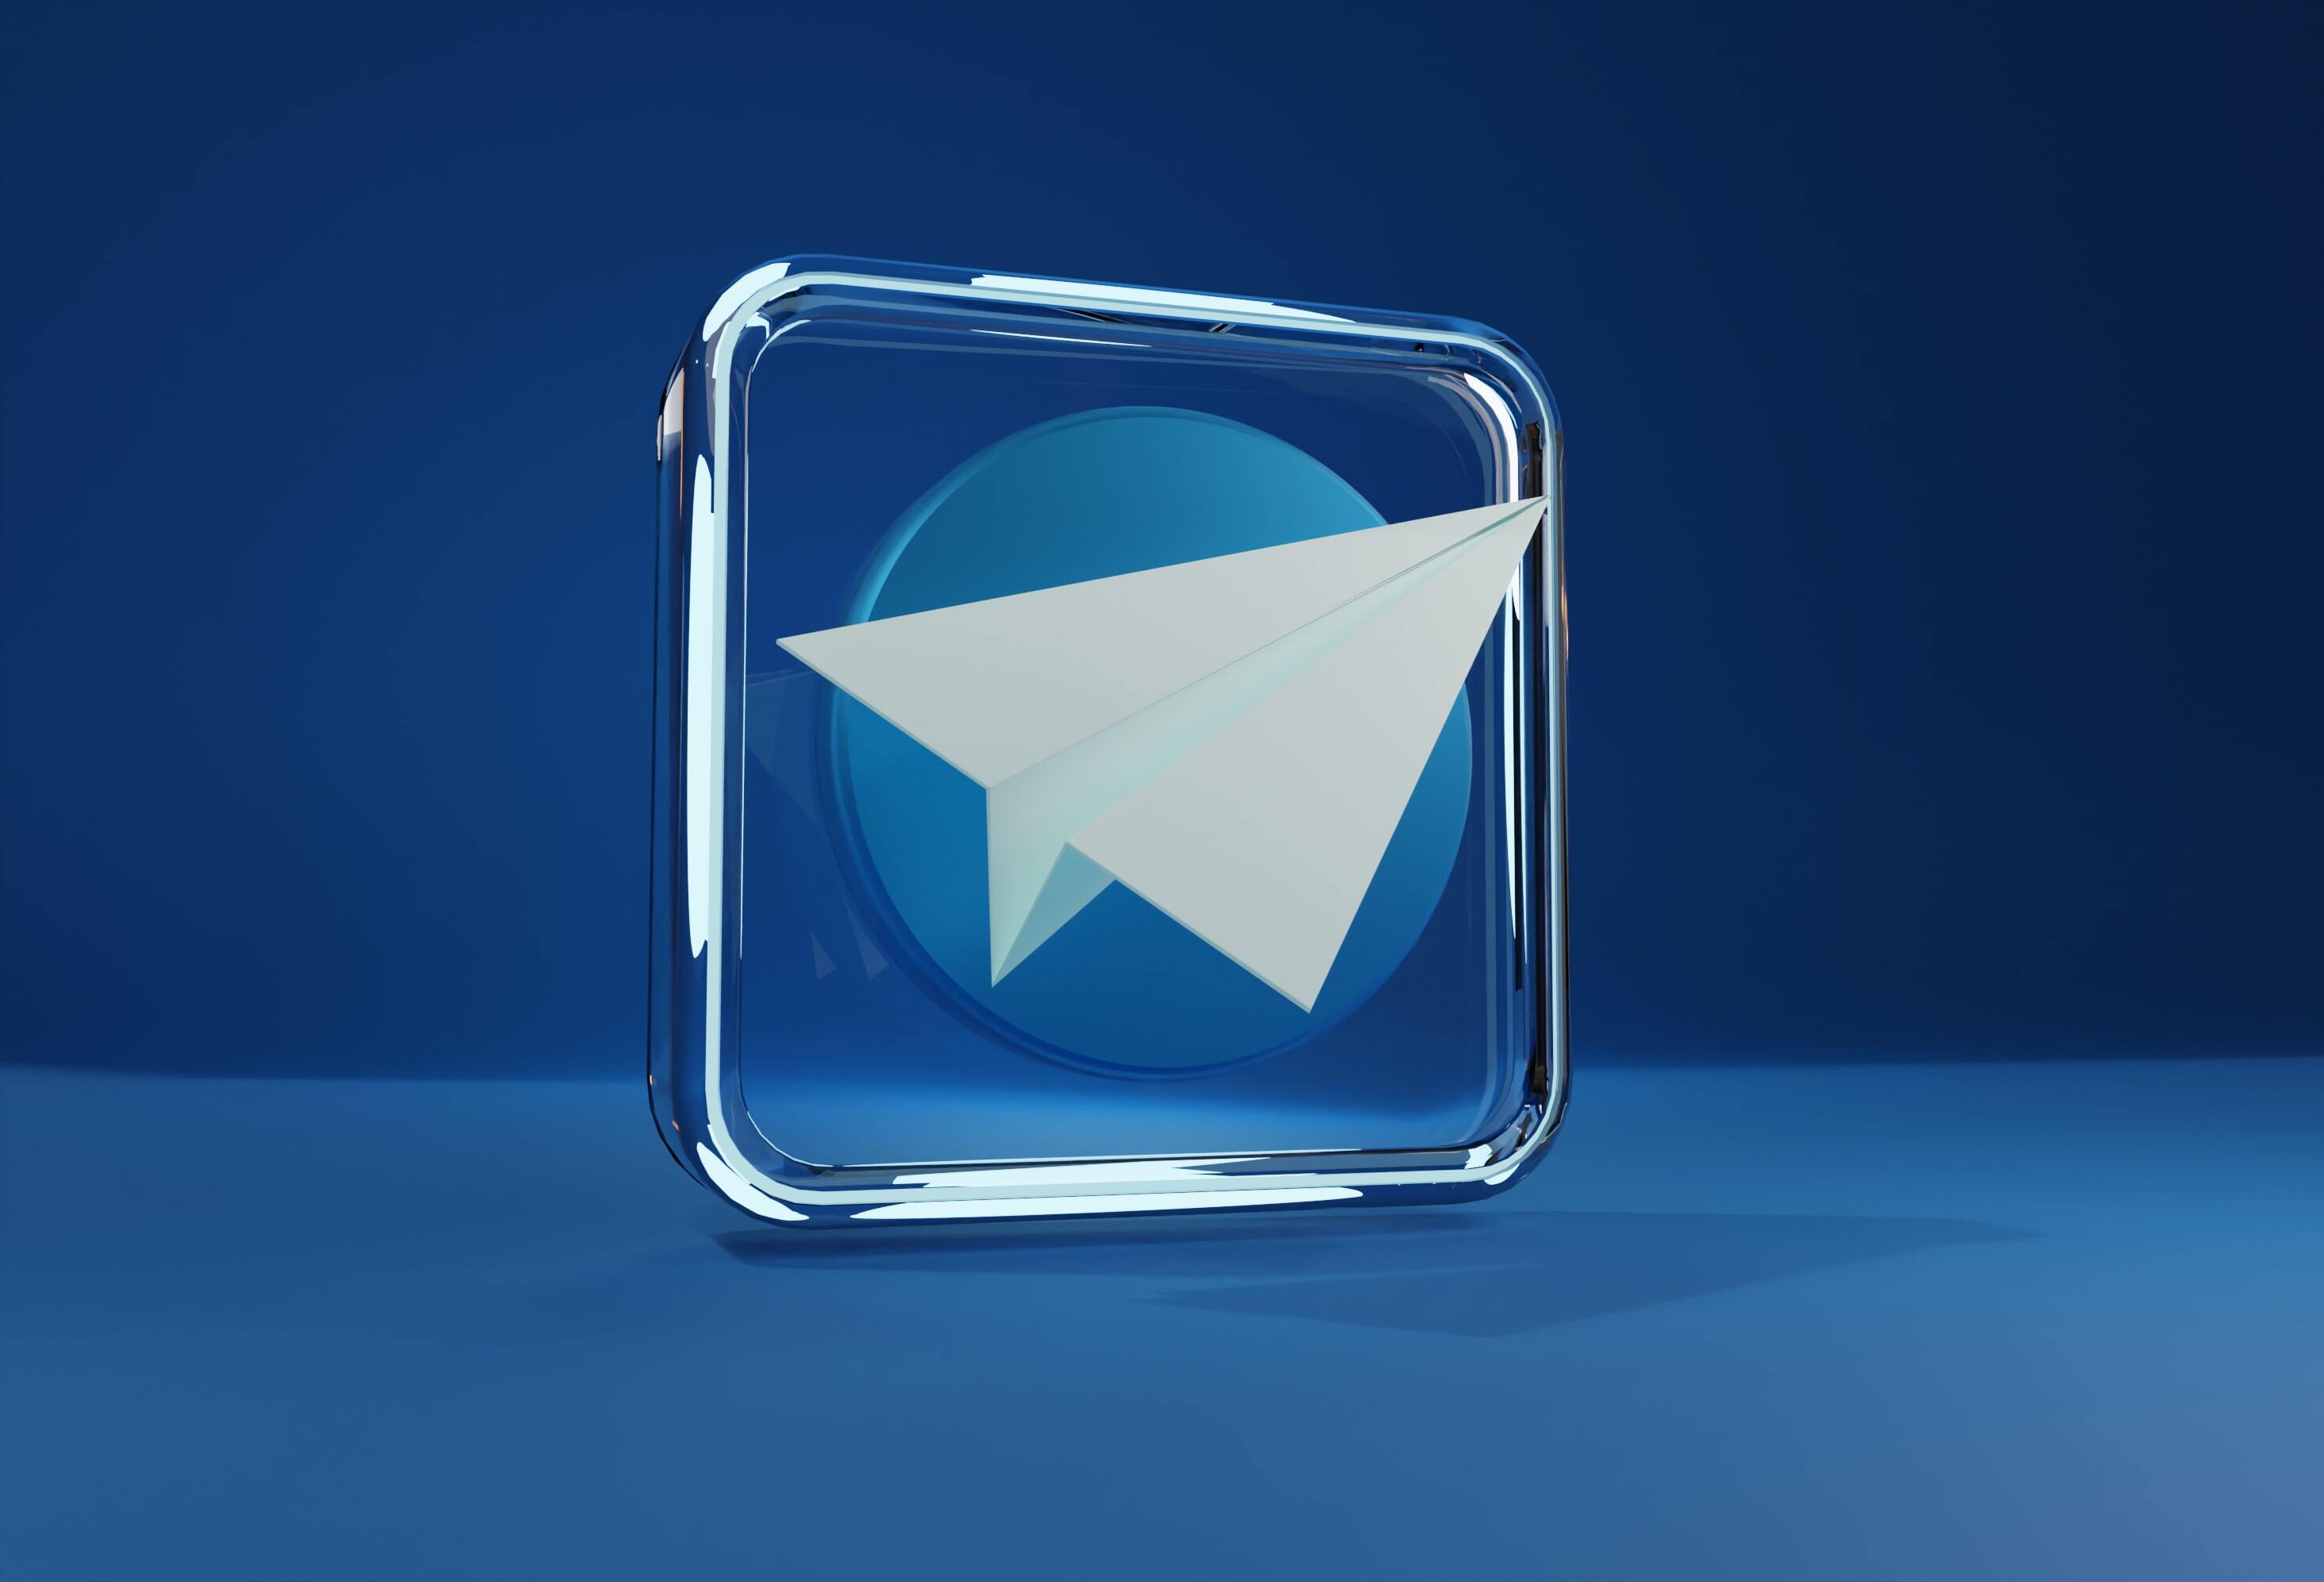  telegram    macbook    